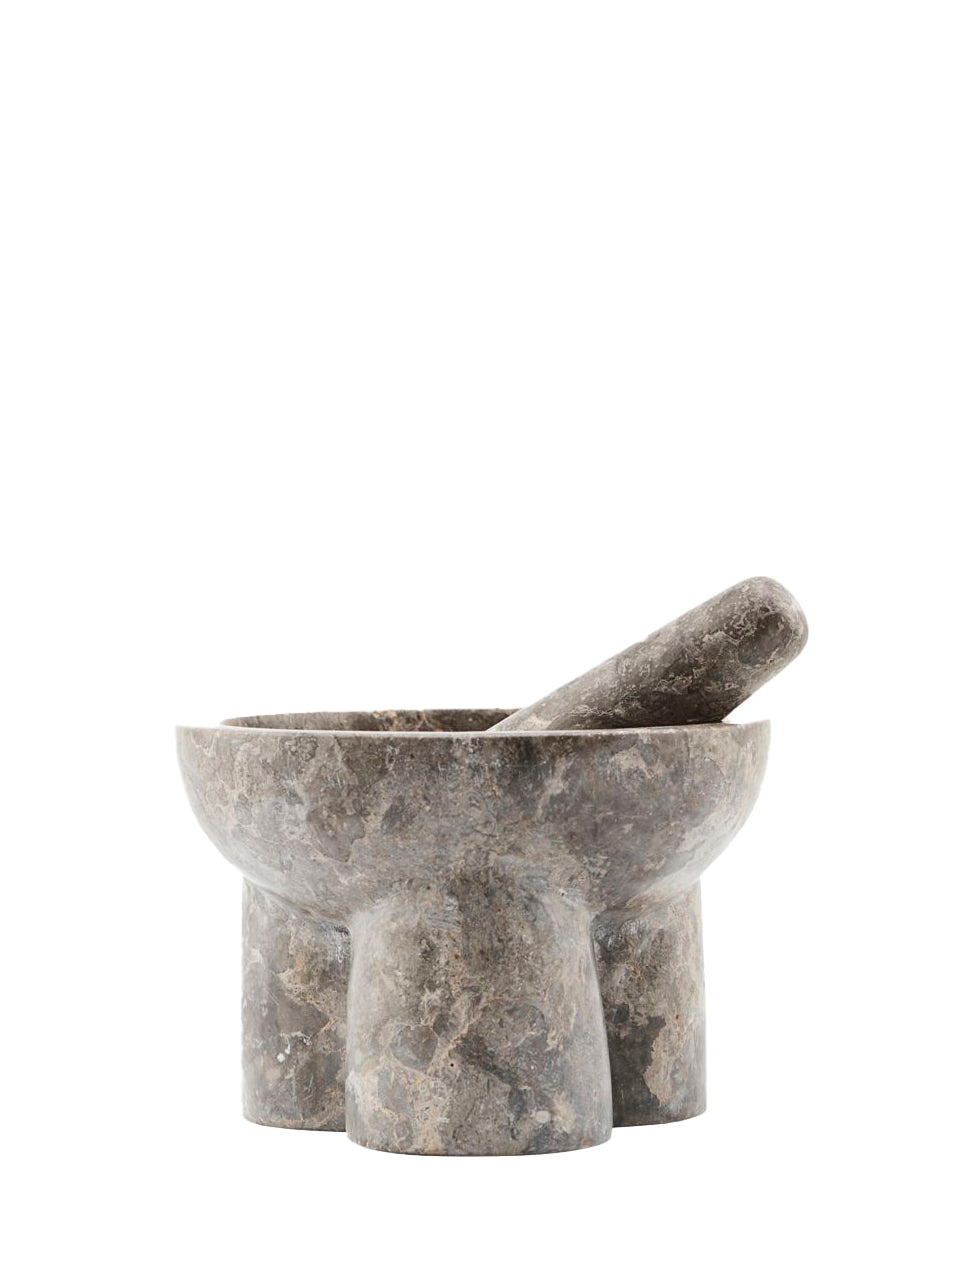 Kulti Mortar w/ pestle, grey/brown